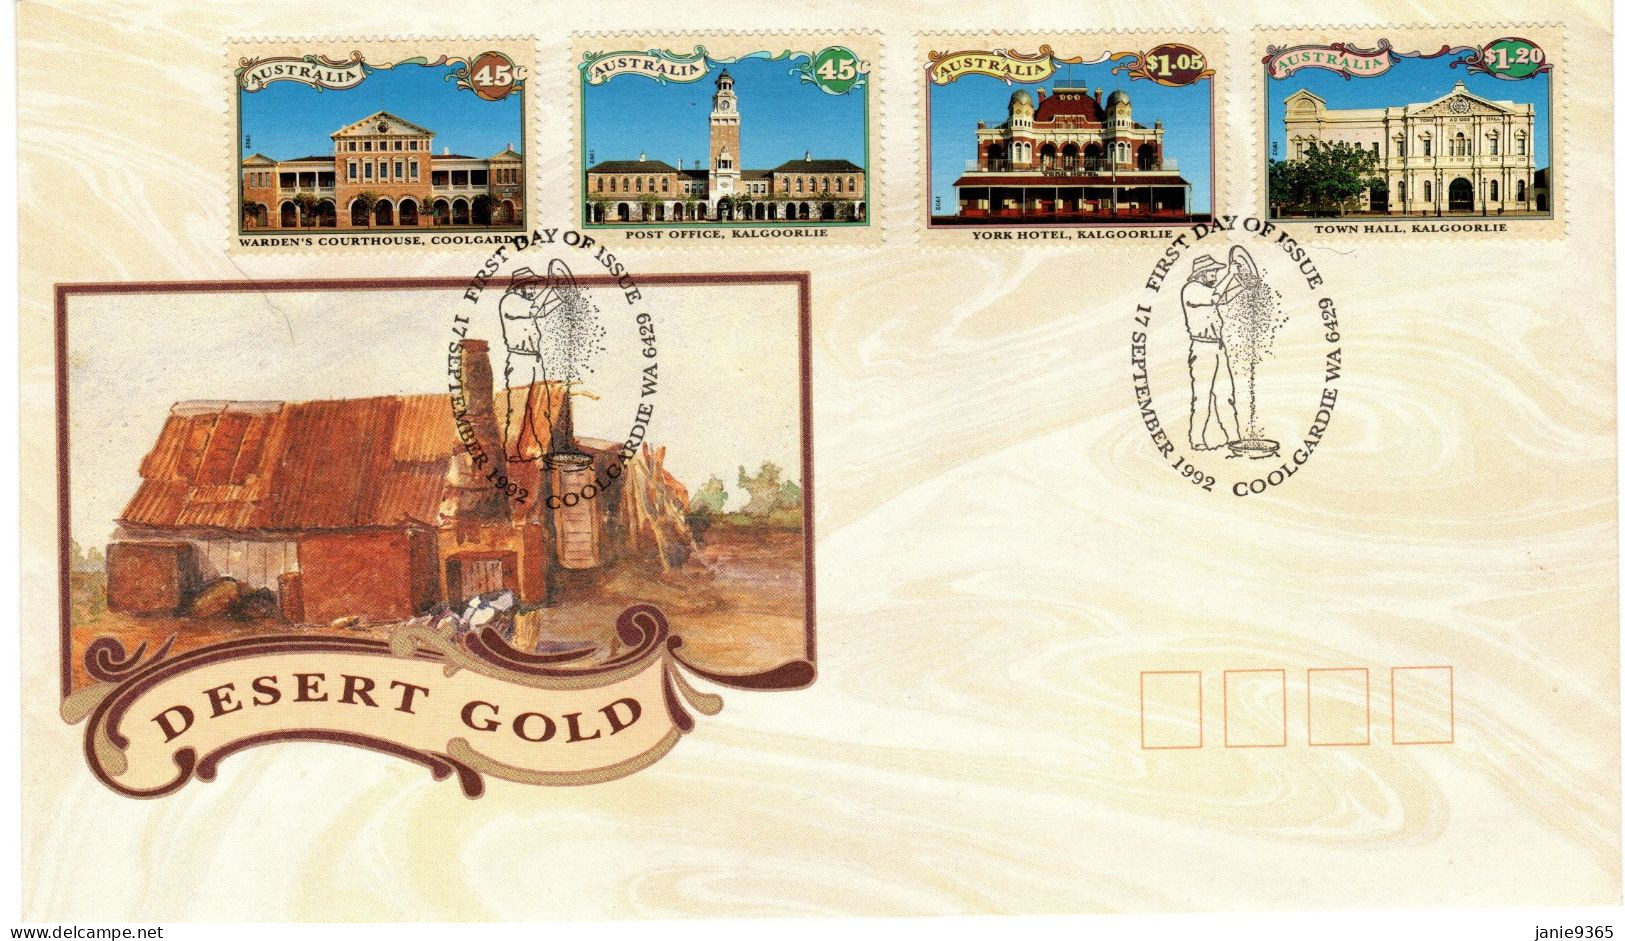 Australia PMCF 247 1992 Desert Gold FDI,pictorial Postmark - Briefe U. Dokumente